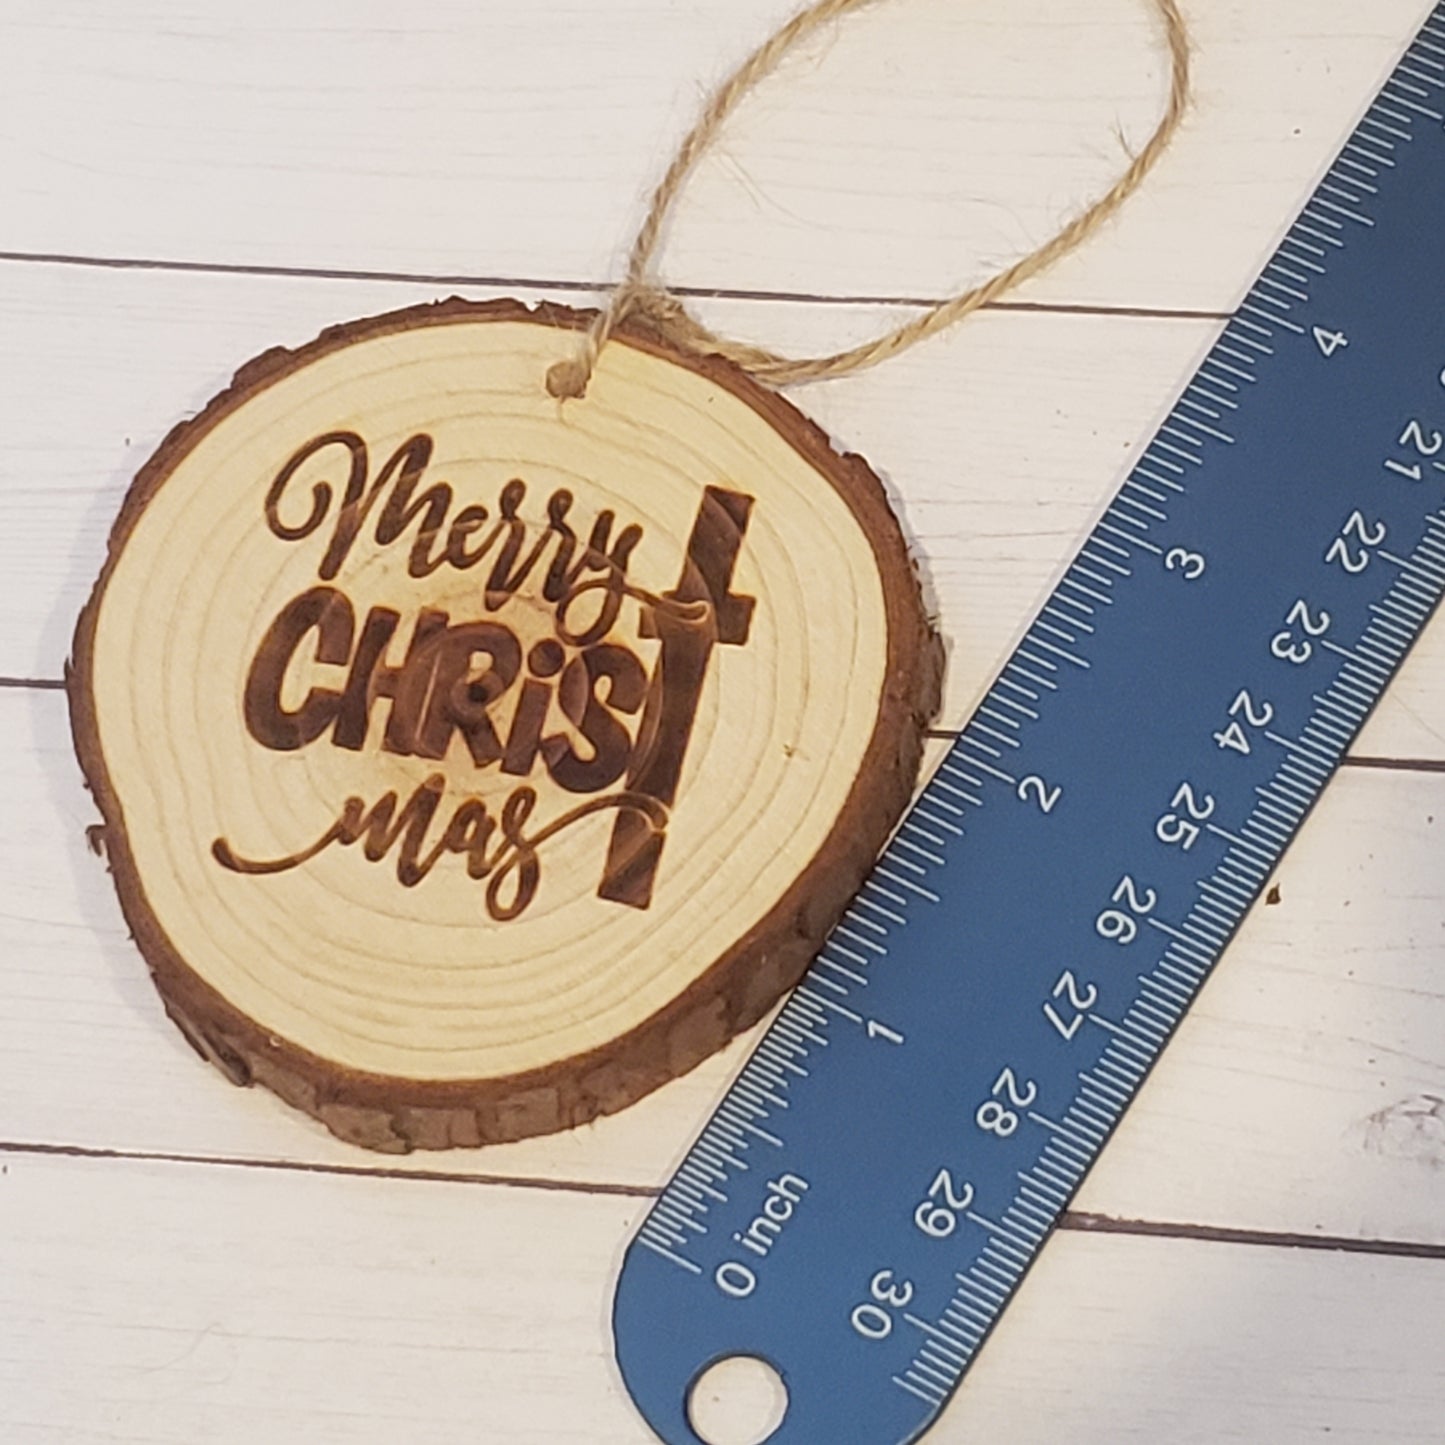 Merry ChrisTmas wood ornament